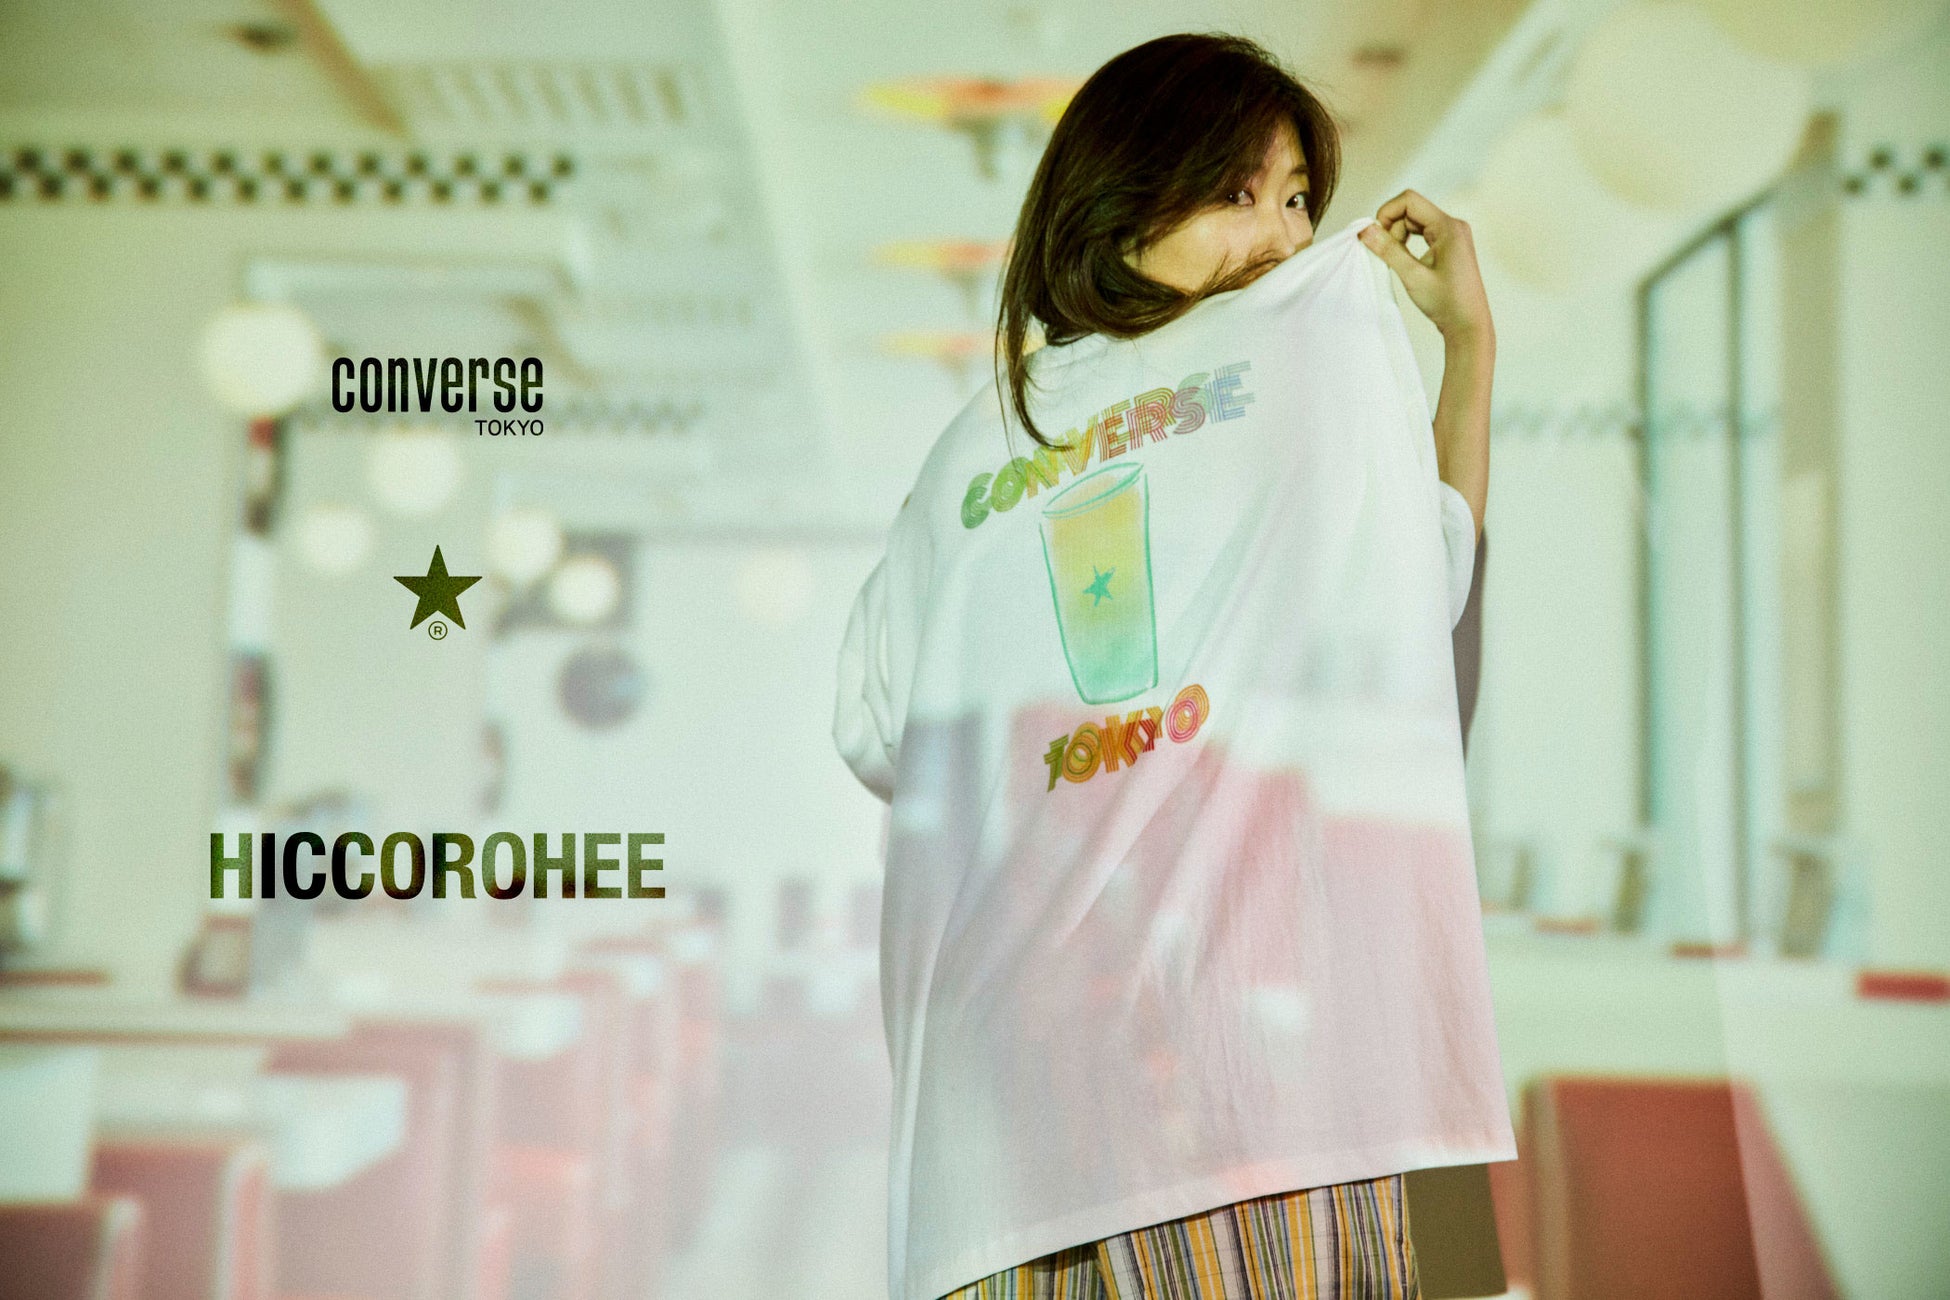 「CONVERSE TOKYO×ヒコロヒー」コラボコレクション第二弾に続報描きおろしアートを落とし込んだ完全受注生産のシューズの発売が決定のサブ画像6